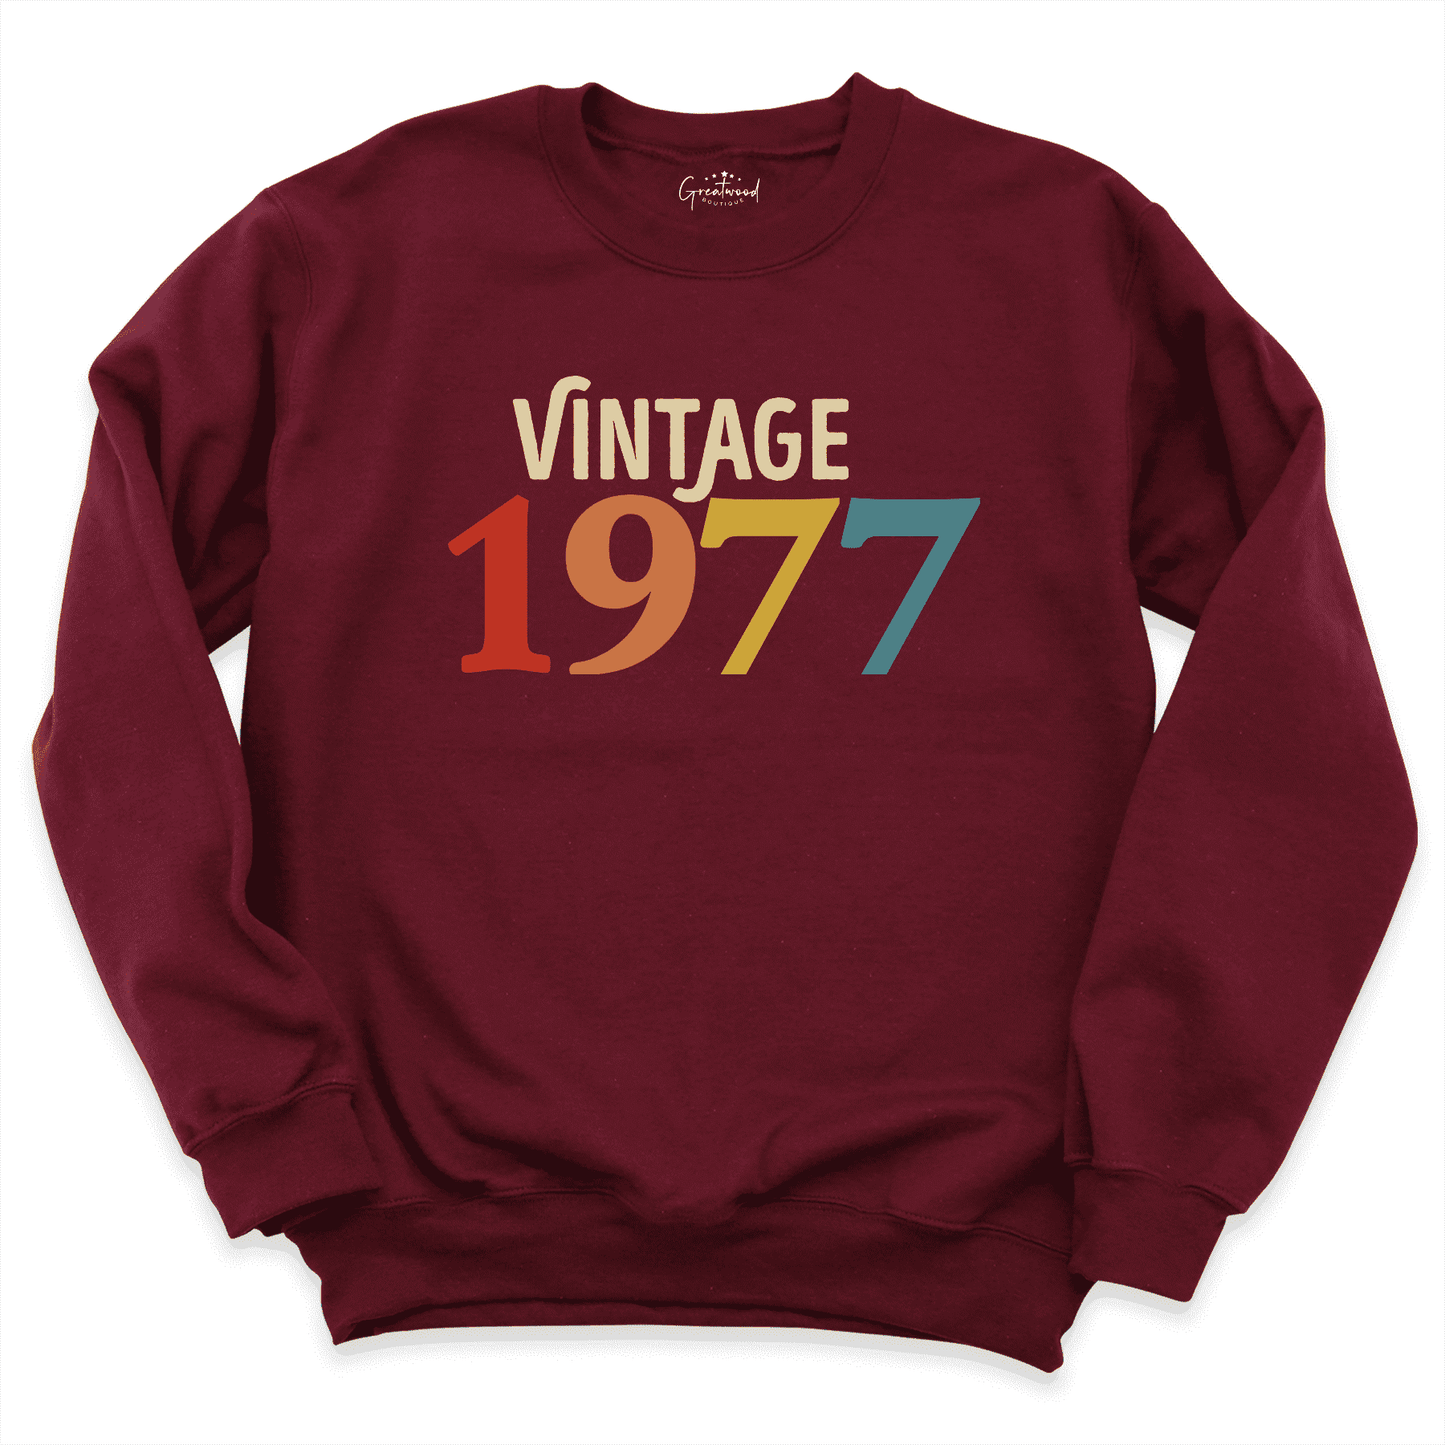 1977 Vintage Shirt